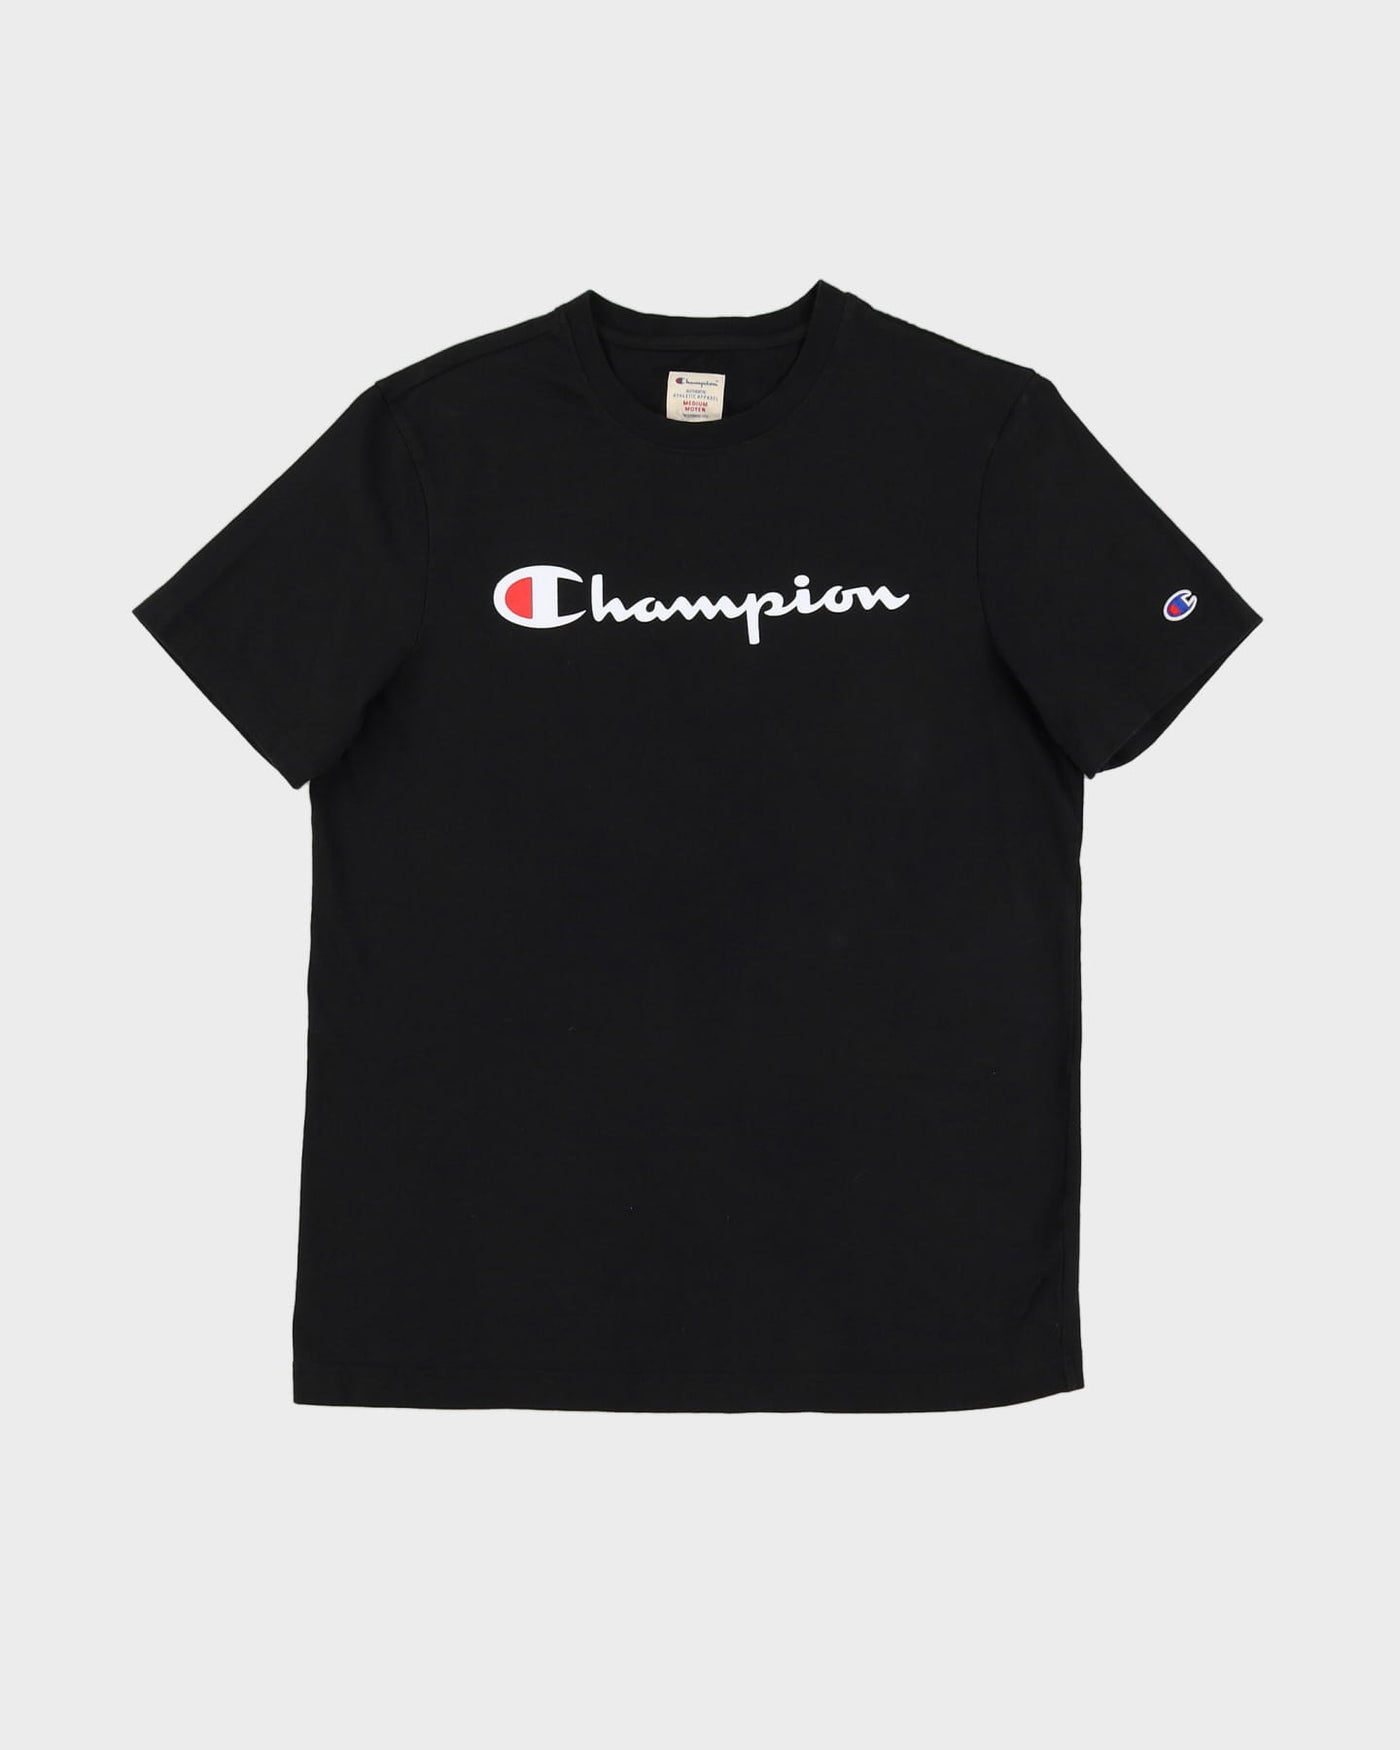 00s Champion Black T-Shirt - M